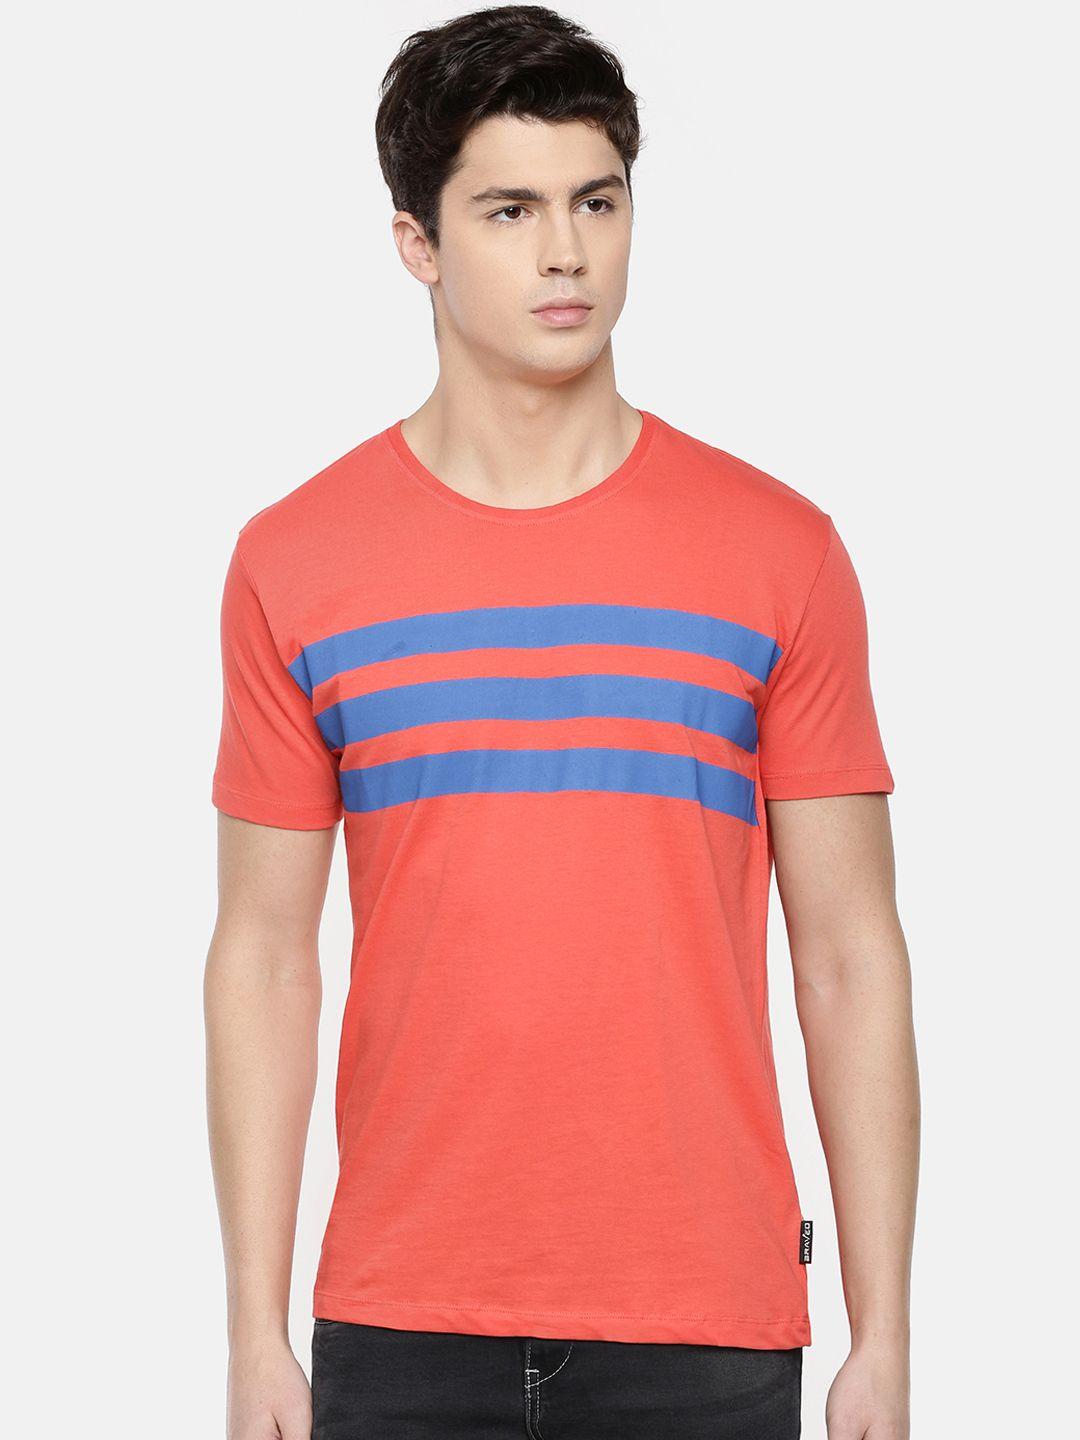 braveo men coral red  blue striped round neck pure cotton t-shirt